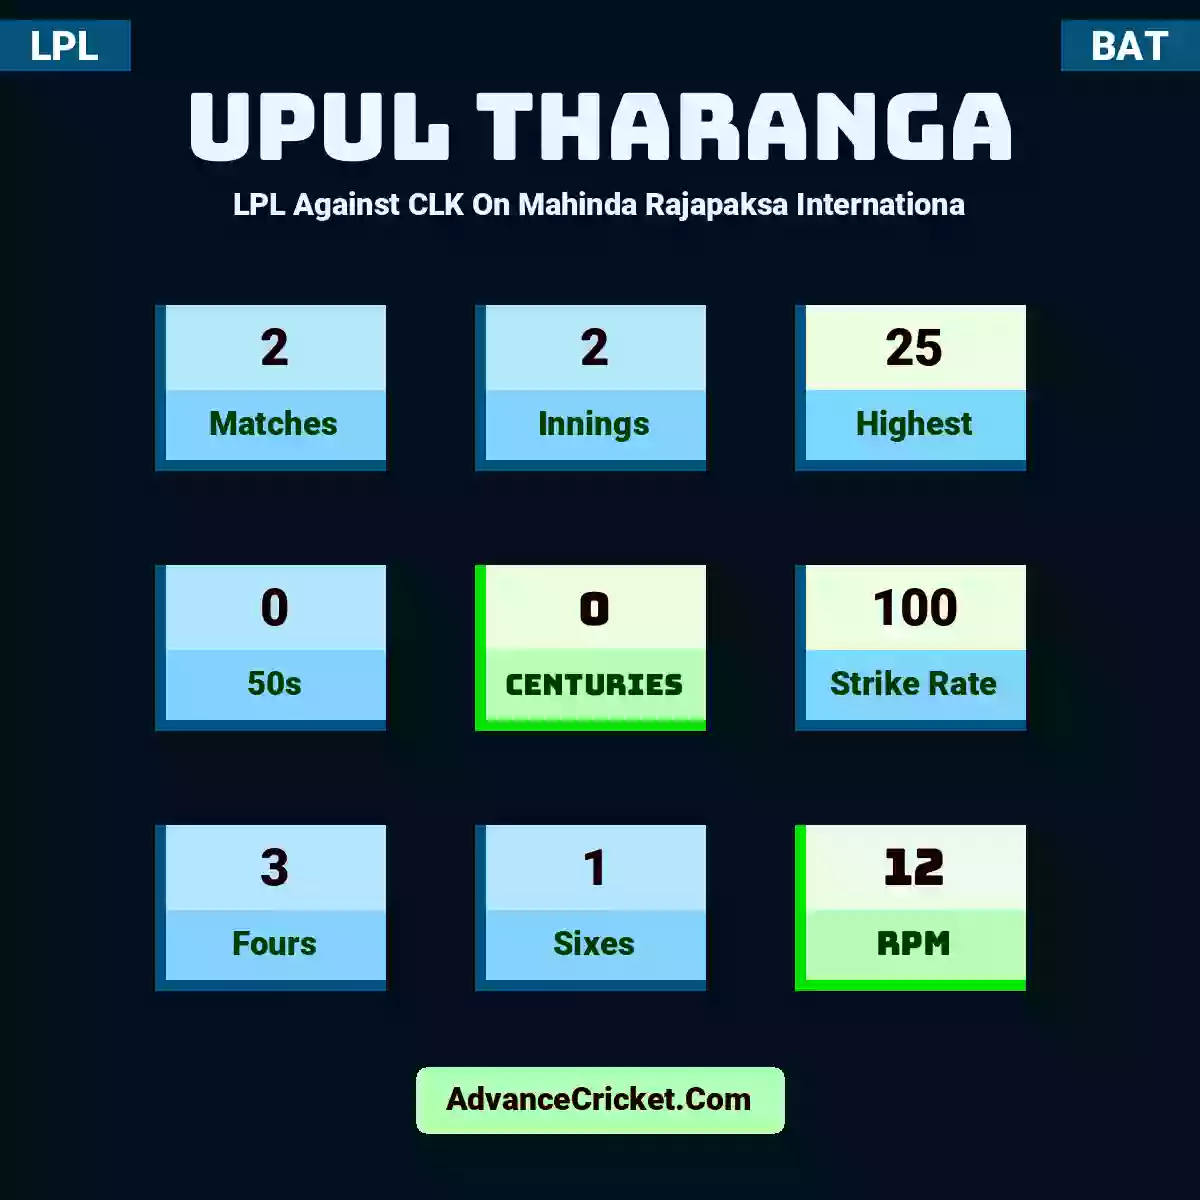 Upul Tharanga LPL  Against CLK On Mahinda Rajapaksa Internationa, Upul Tharanga played 2 matches, scored 25 runs as highest, 0 half-centuries, and 0 centuries, with a strike rate of 100. U.Tharanga hit 3 fours and 1 sixes, with an RPM of 12.